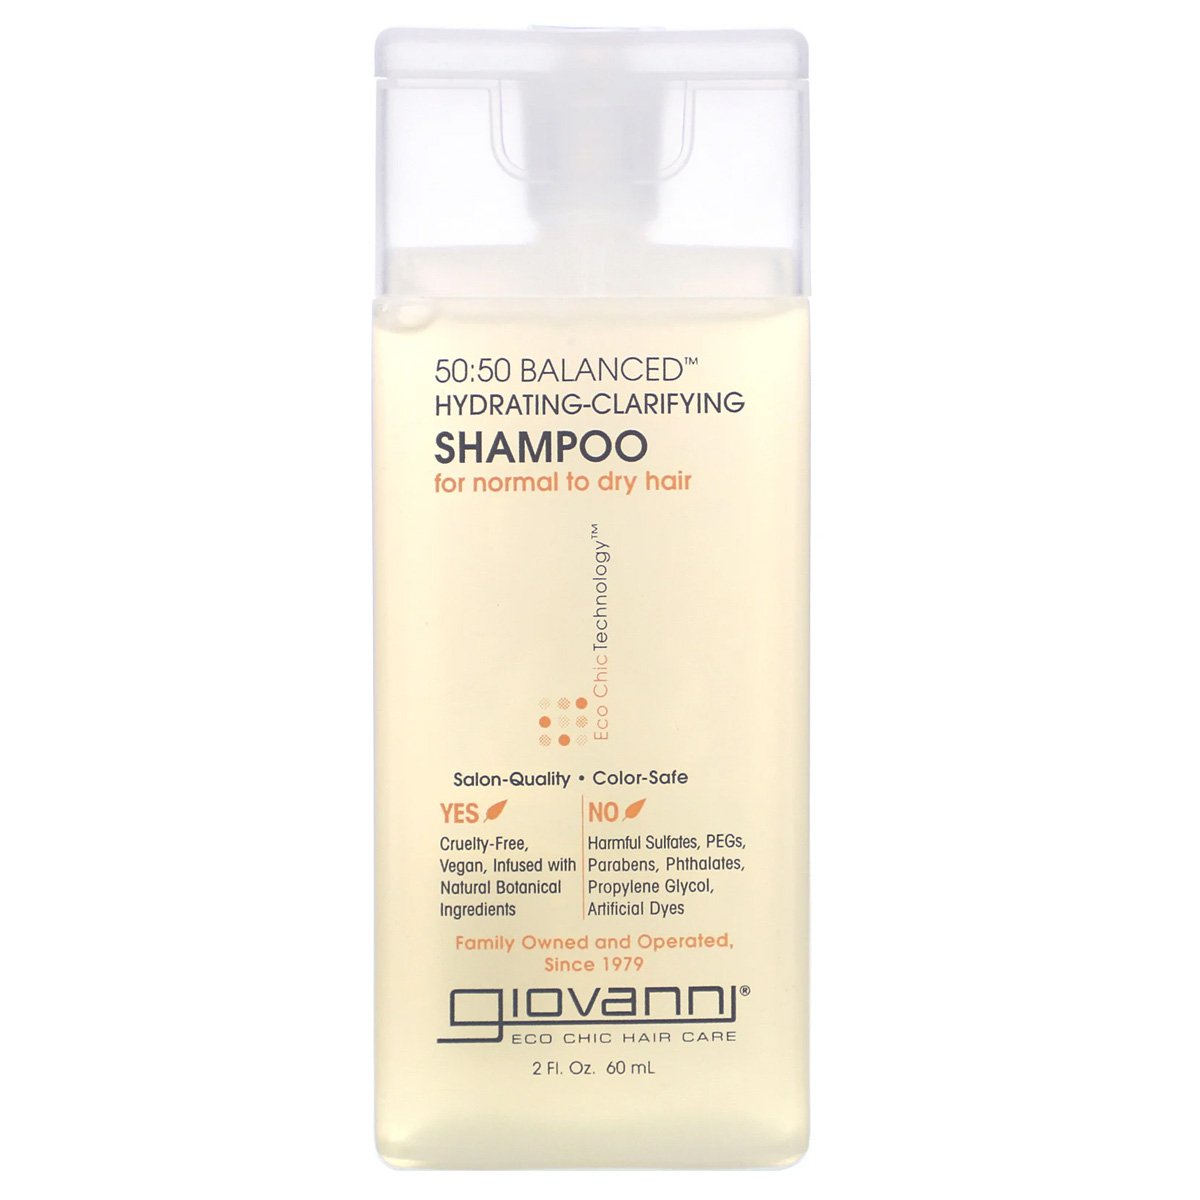 Giovanni 50:50 Balanced Hydrating - Clarifying Shampoo 60ml (Travel Size)